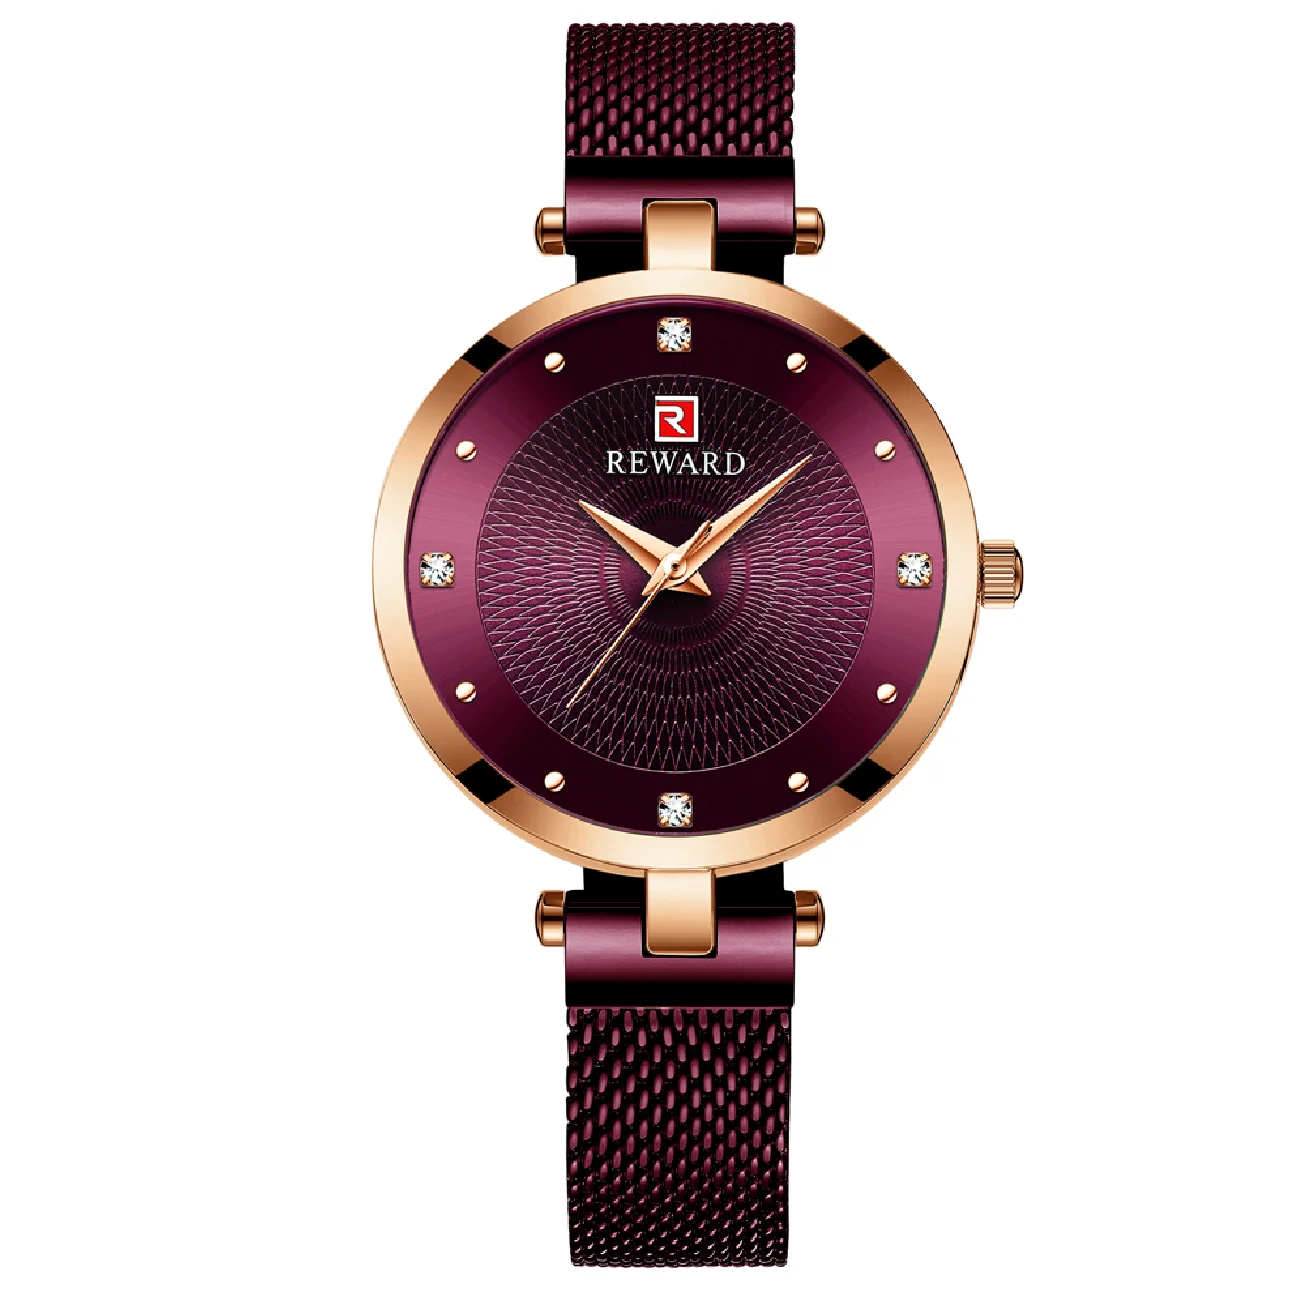 New reloj mujer 2022 Luxury Women Watches Fashion Dress Quartz Watch Ladies Simple Casual Waterproof Wrist Watch Relogio Feminin enlarge